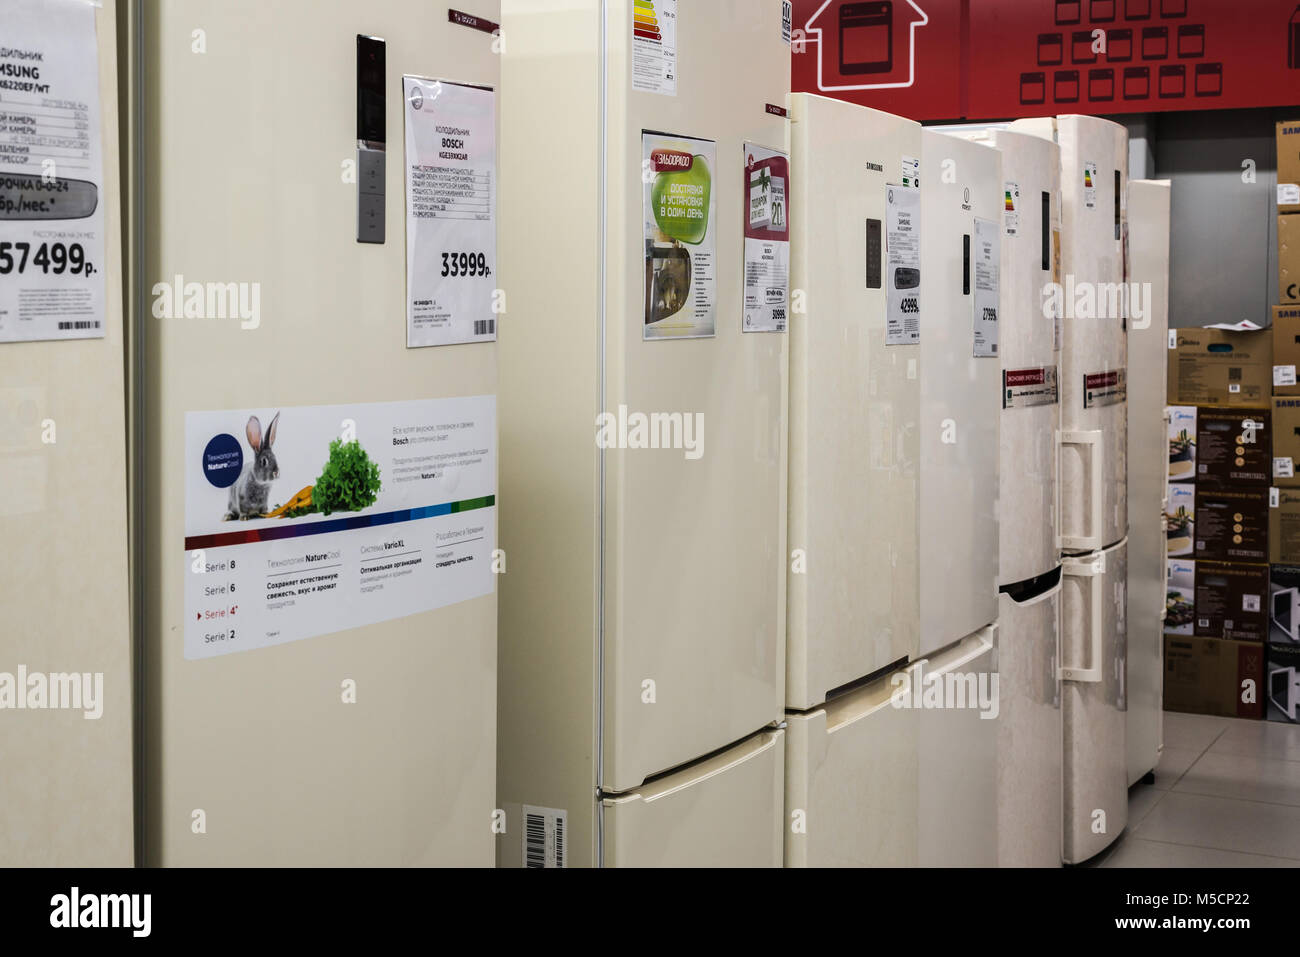 Moscow, Russia - February 20, 2018. refrigerators in electronics store Eldorado Stock Photo